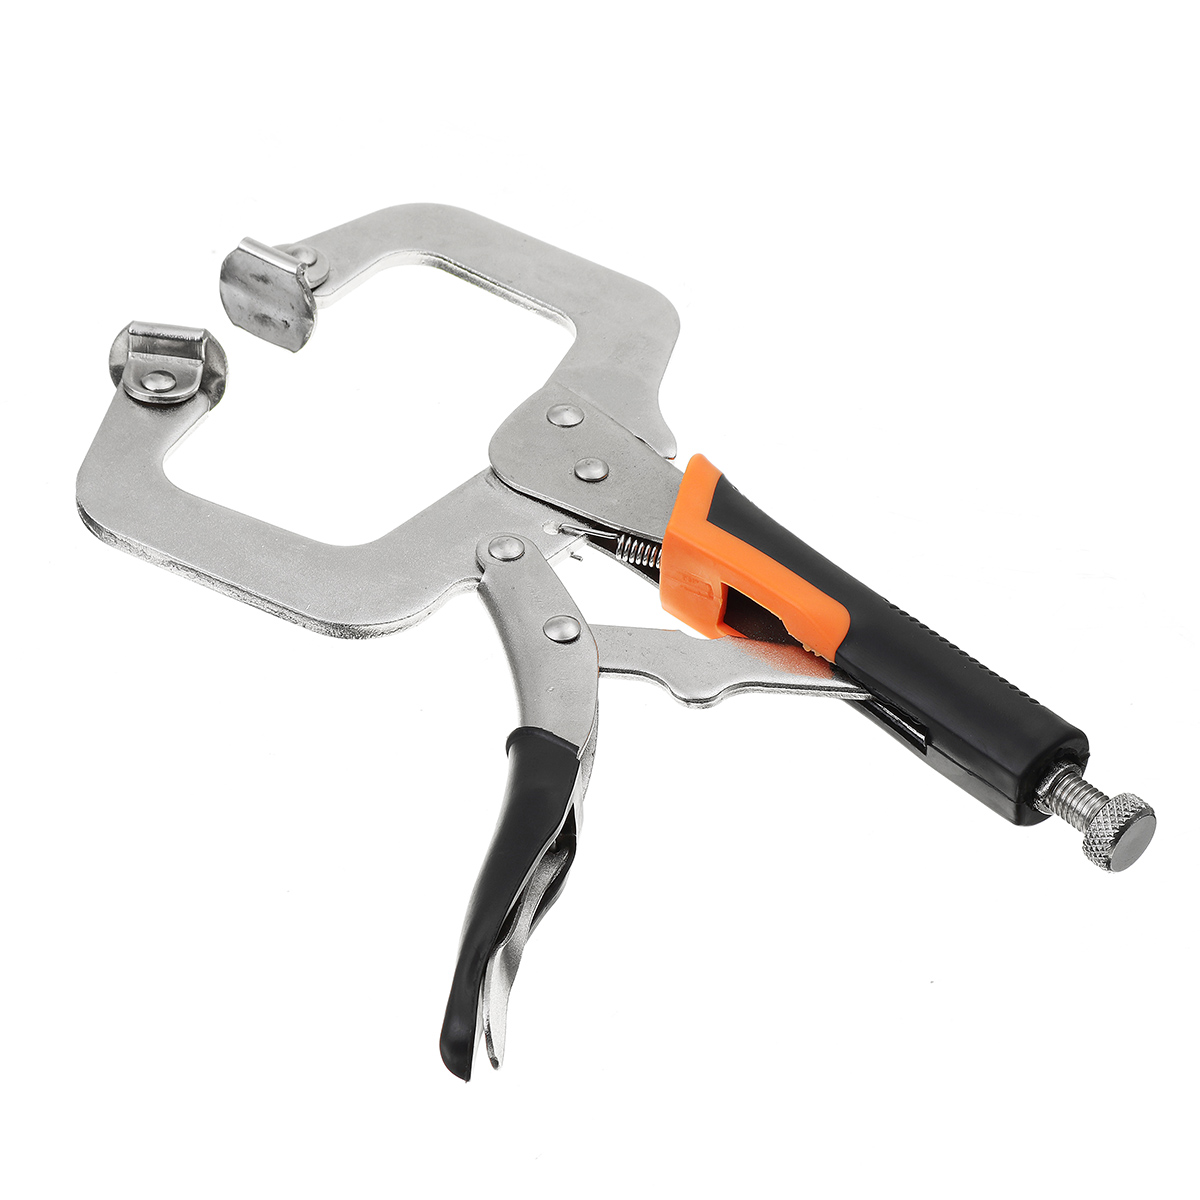 Plastic-Pocket-Hole-Jig-Set-Woodworking-Tools-Welding-C-Clamp-Locking-Plier-Tenon-Locator-1662682-6